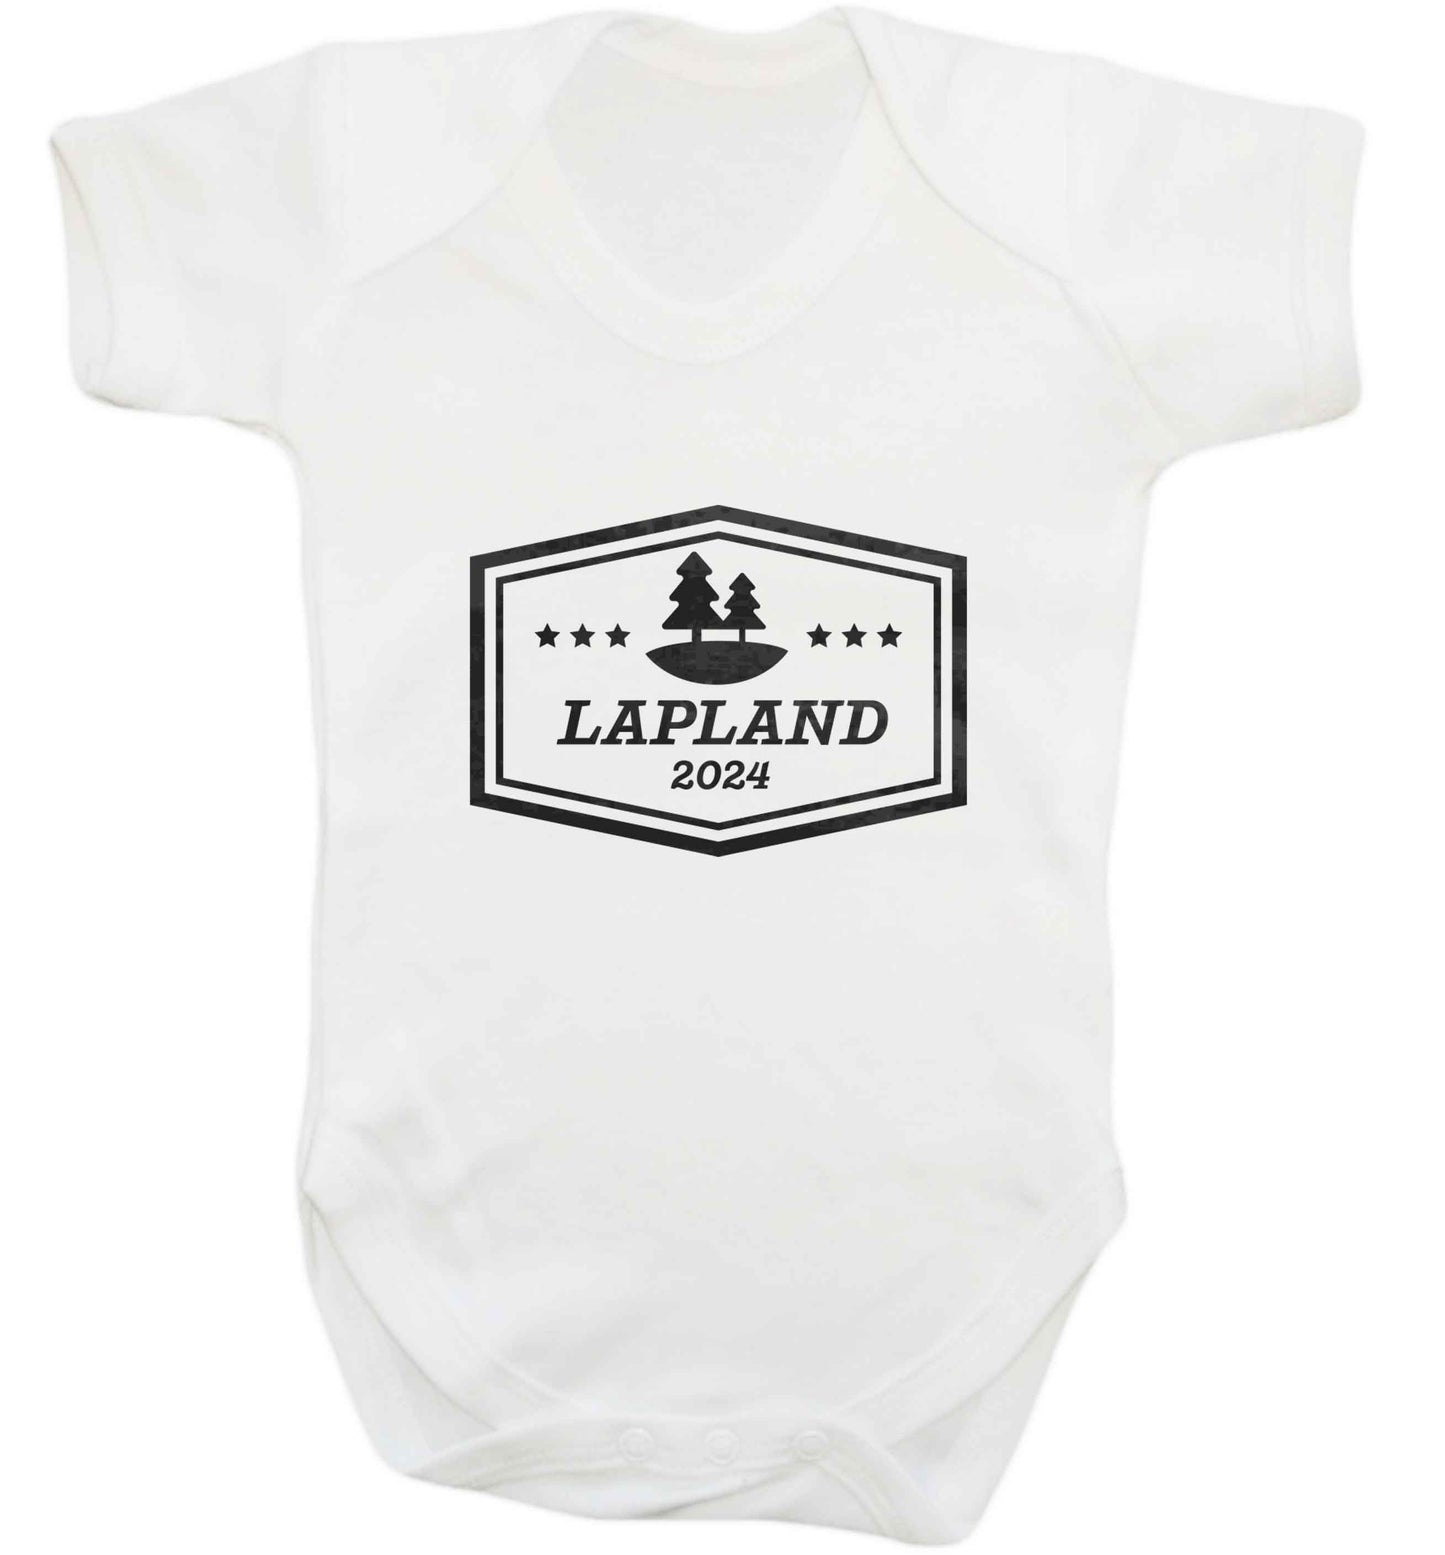 Custom date Lapland baby vest white 18-24 months